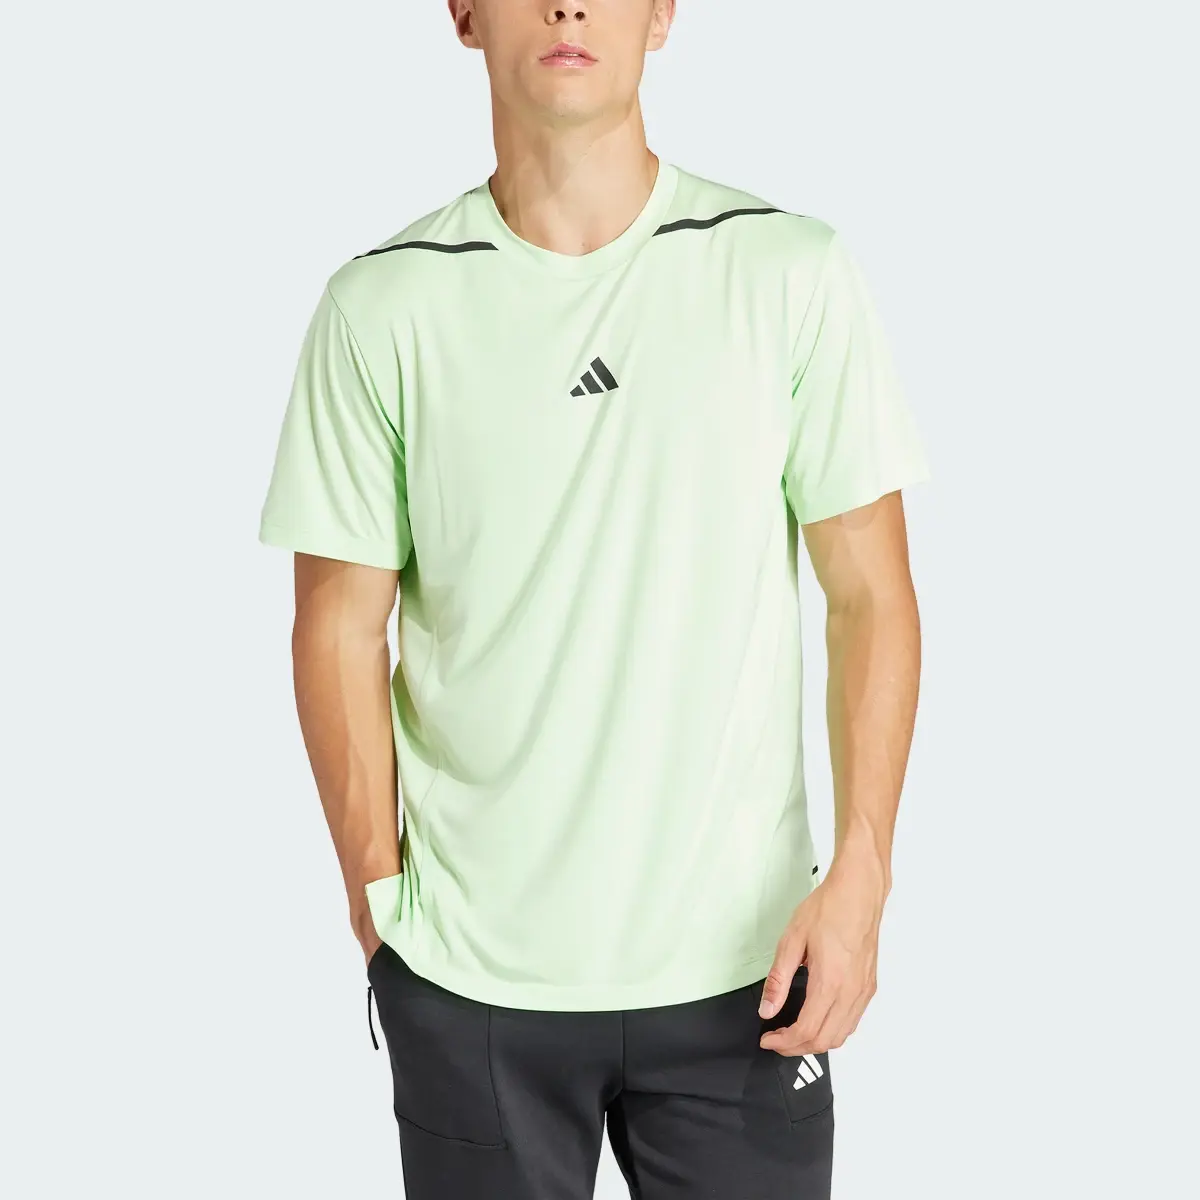 Adidas Designed for Training Workout T-Shirt. 1